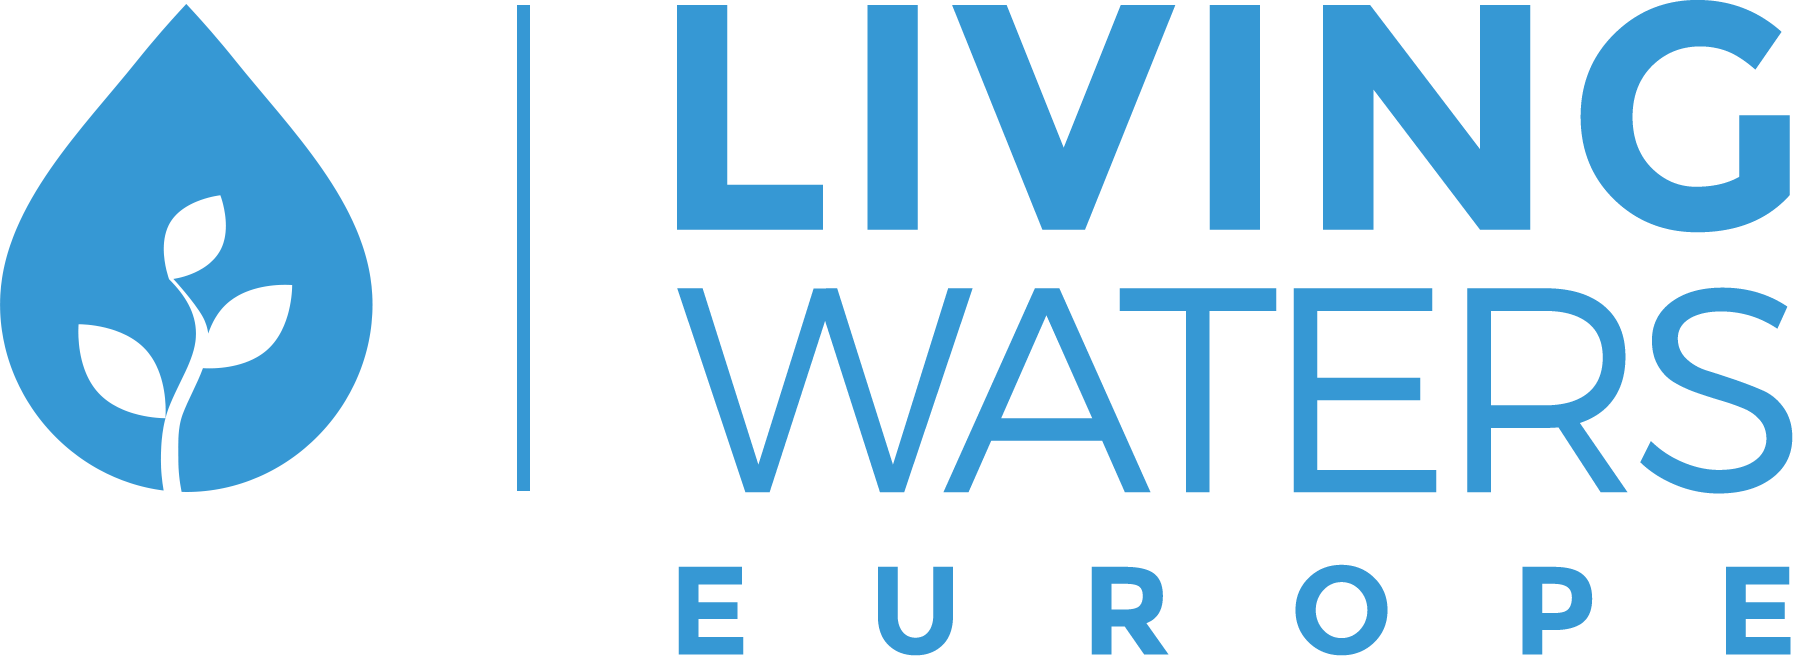 Living Waters Europe logo